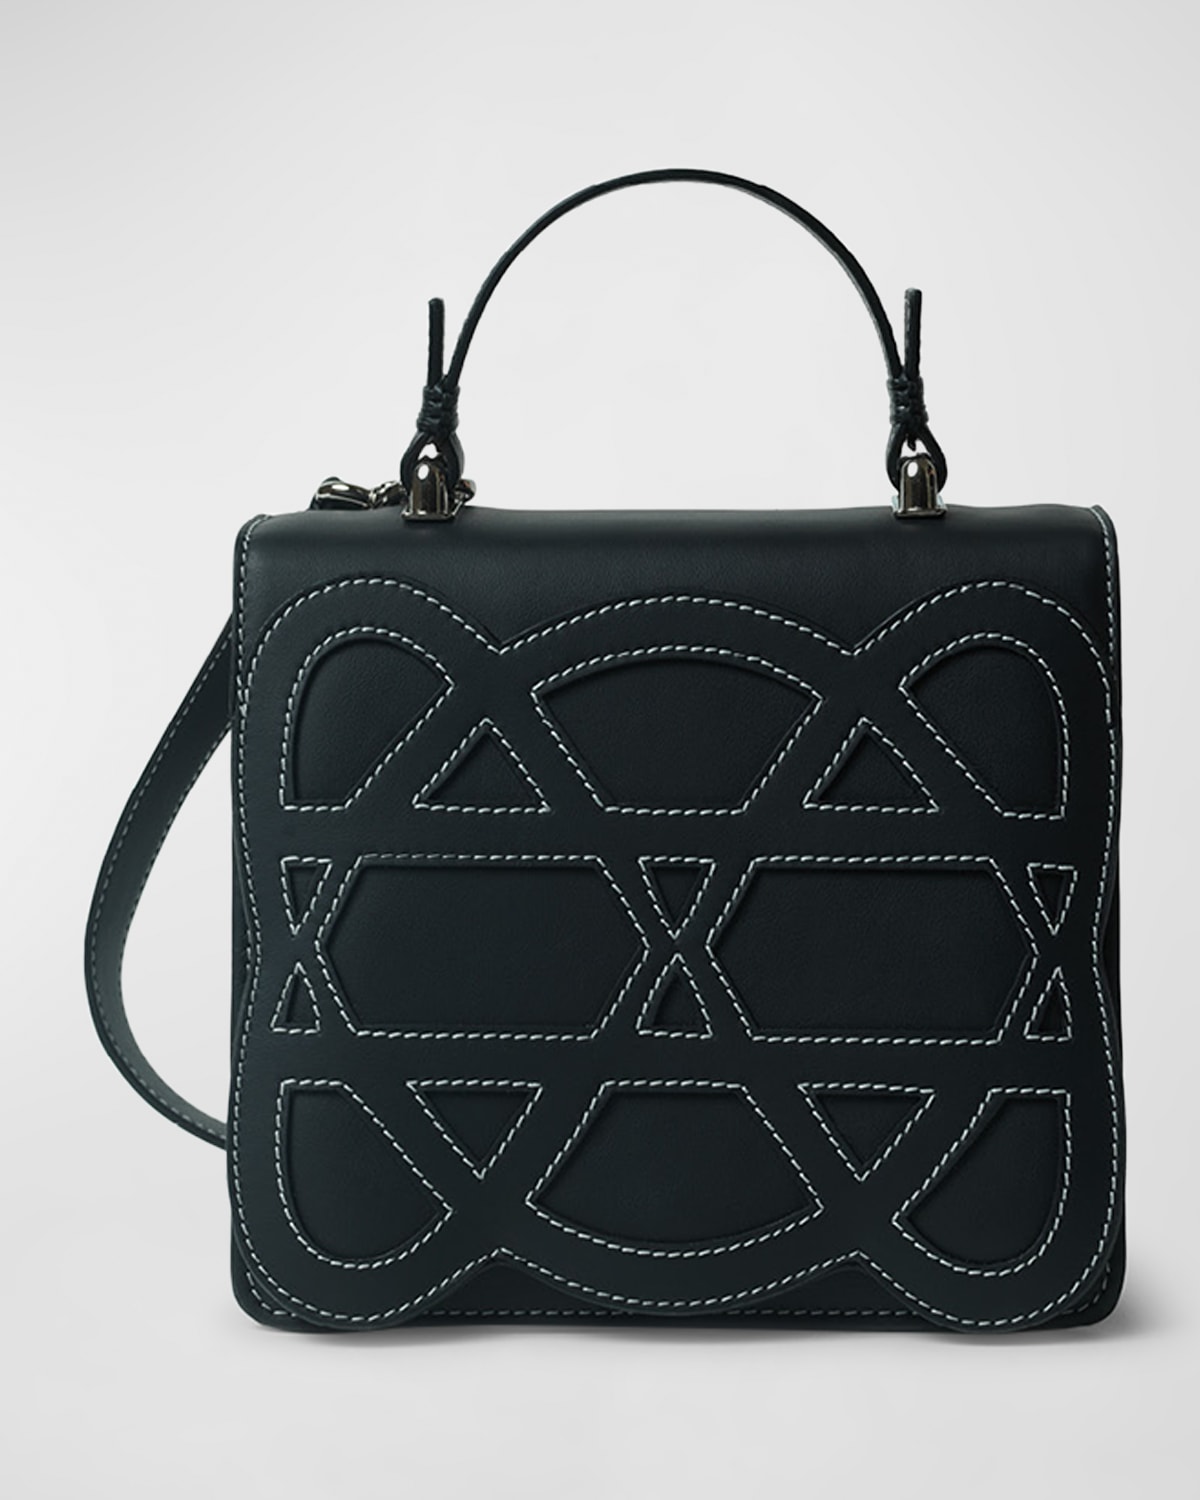 Pandora Stitched Leather Top-Handle Bag